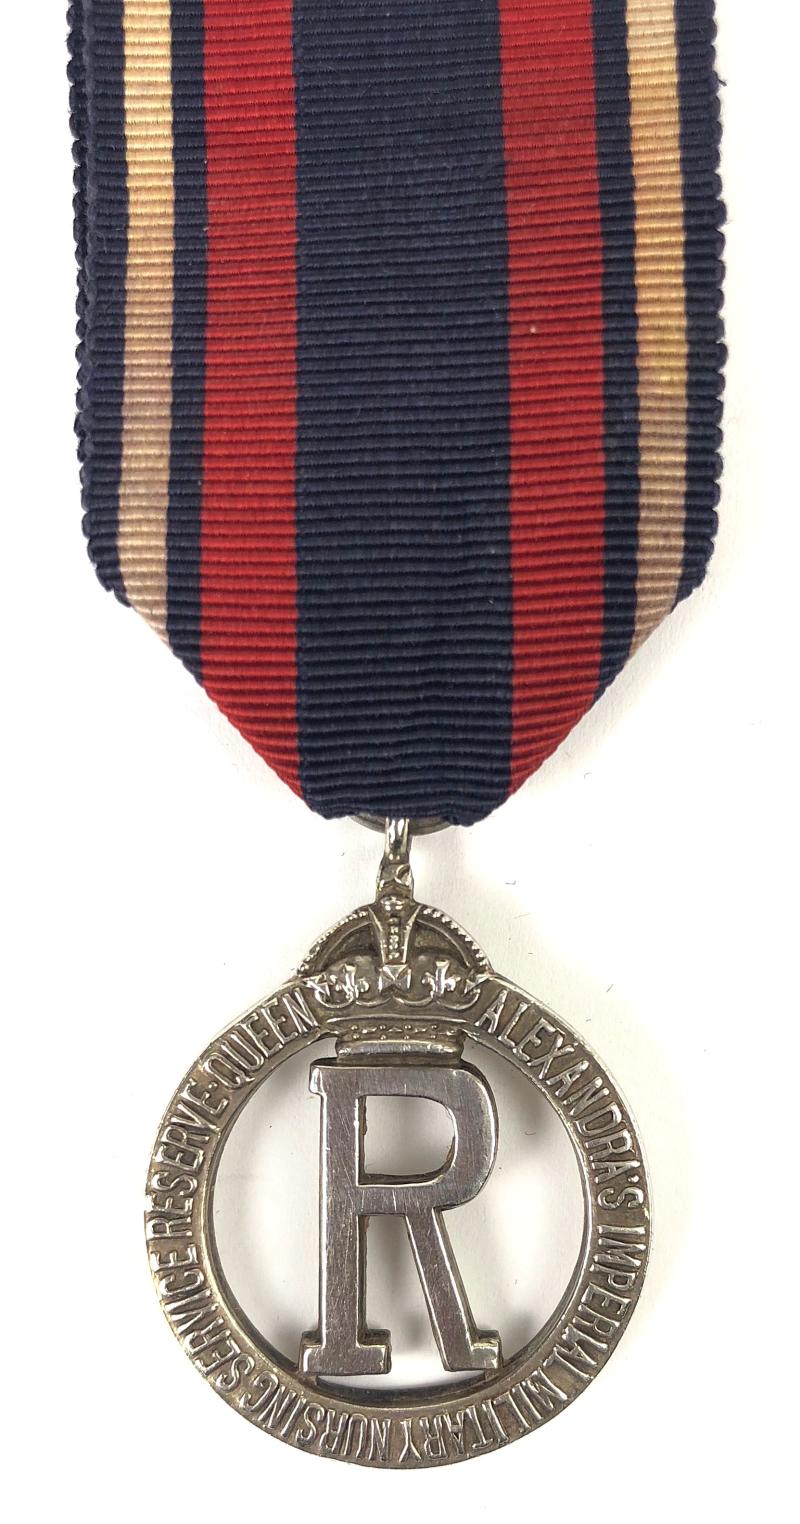 QAIMNSR 1915 hallmarked silver tippet badge medal